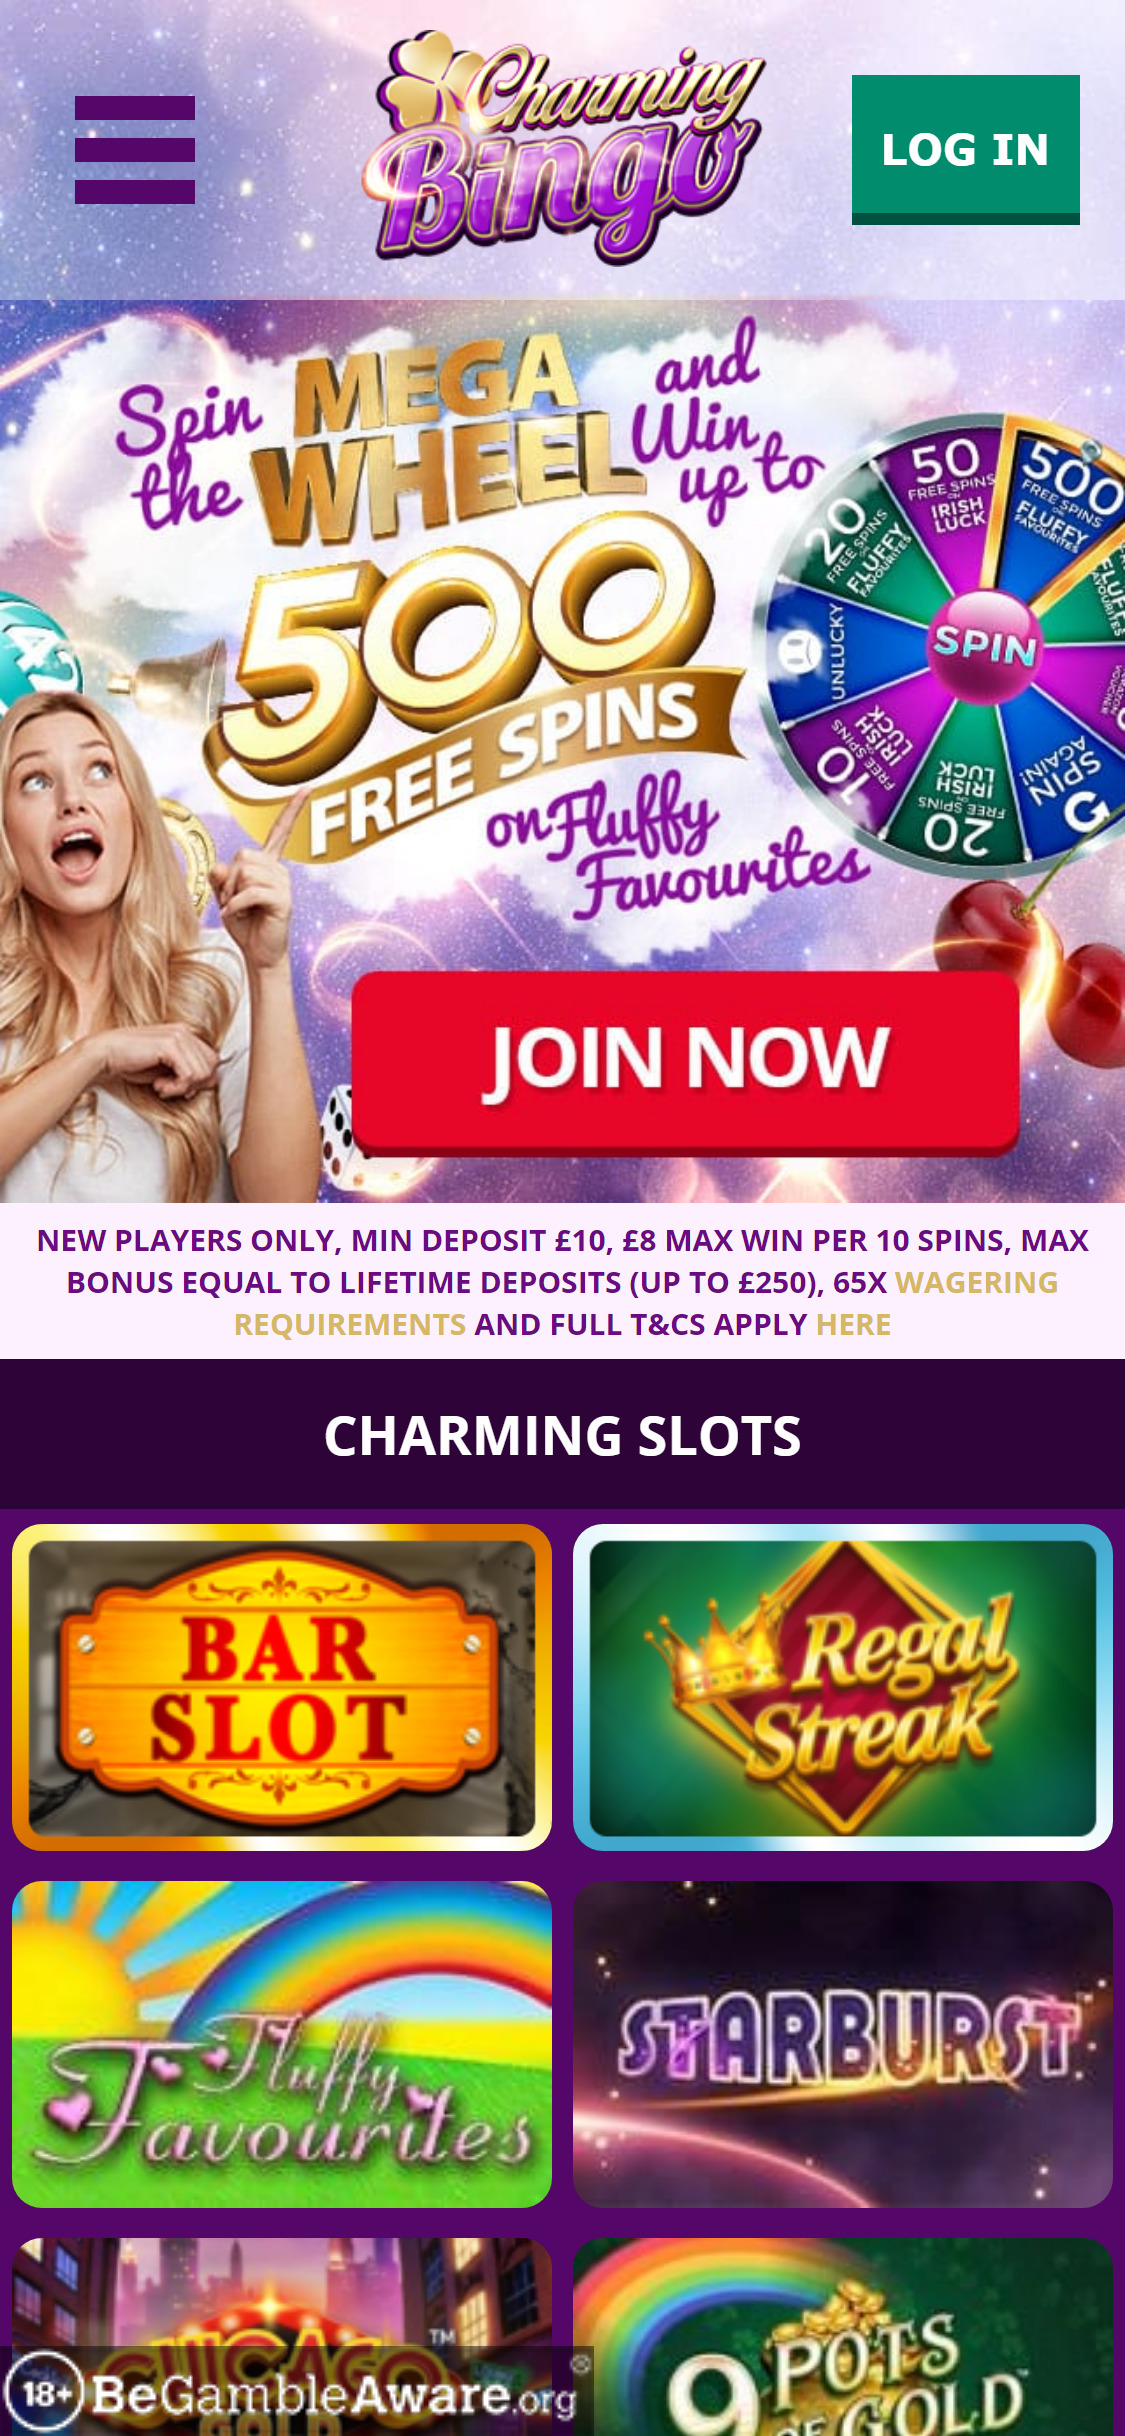 Charming Bingo Casino Mobile Review